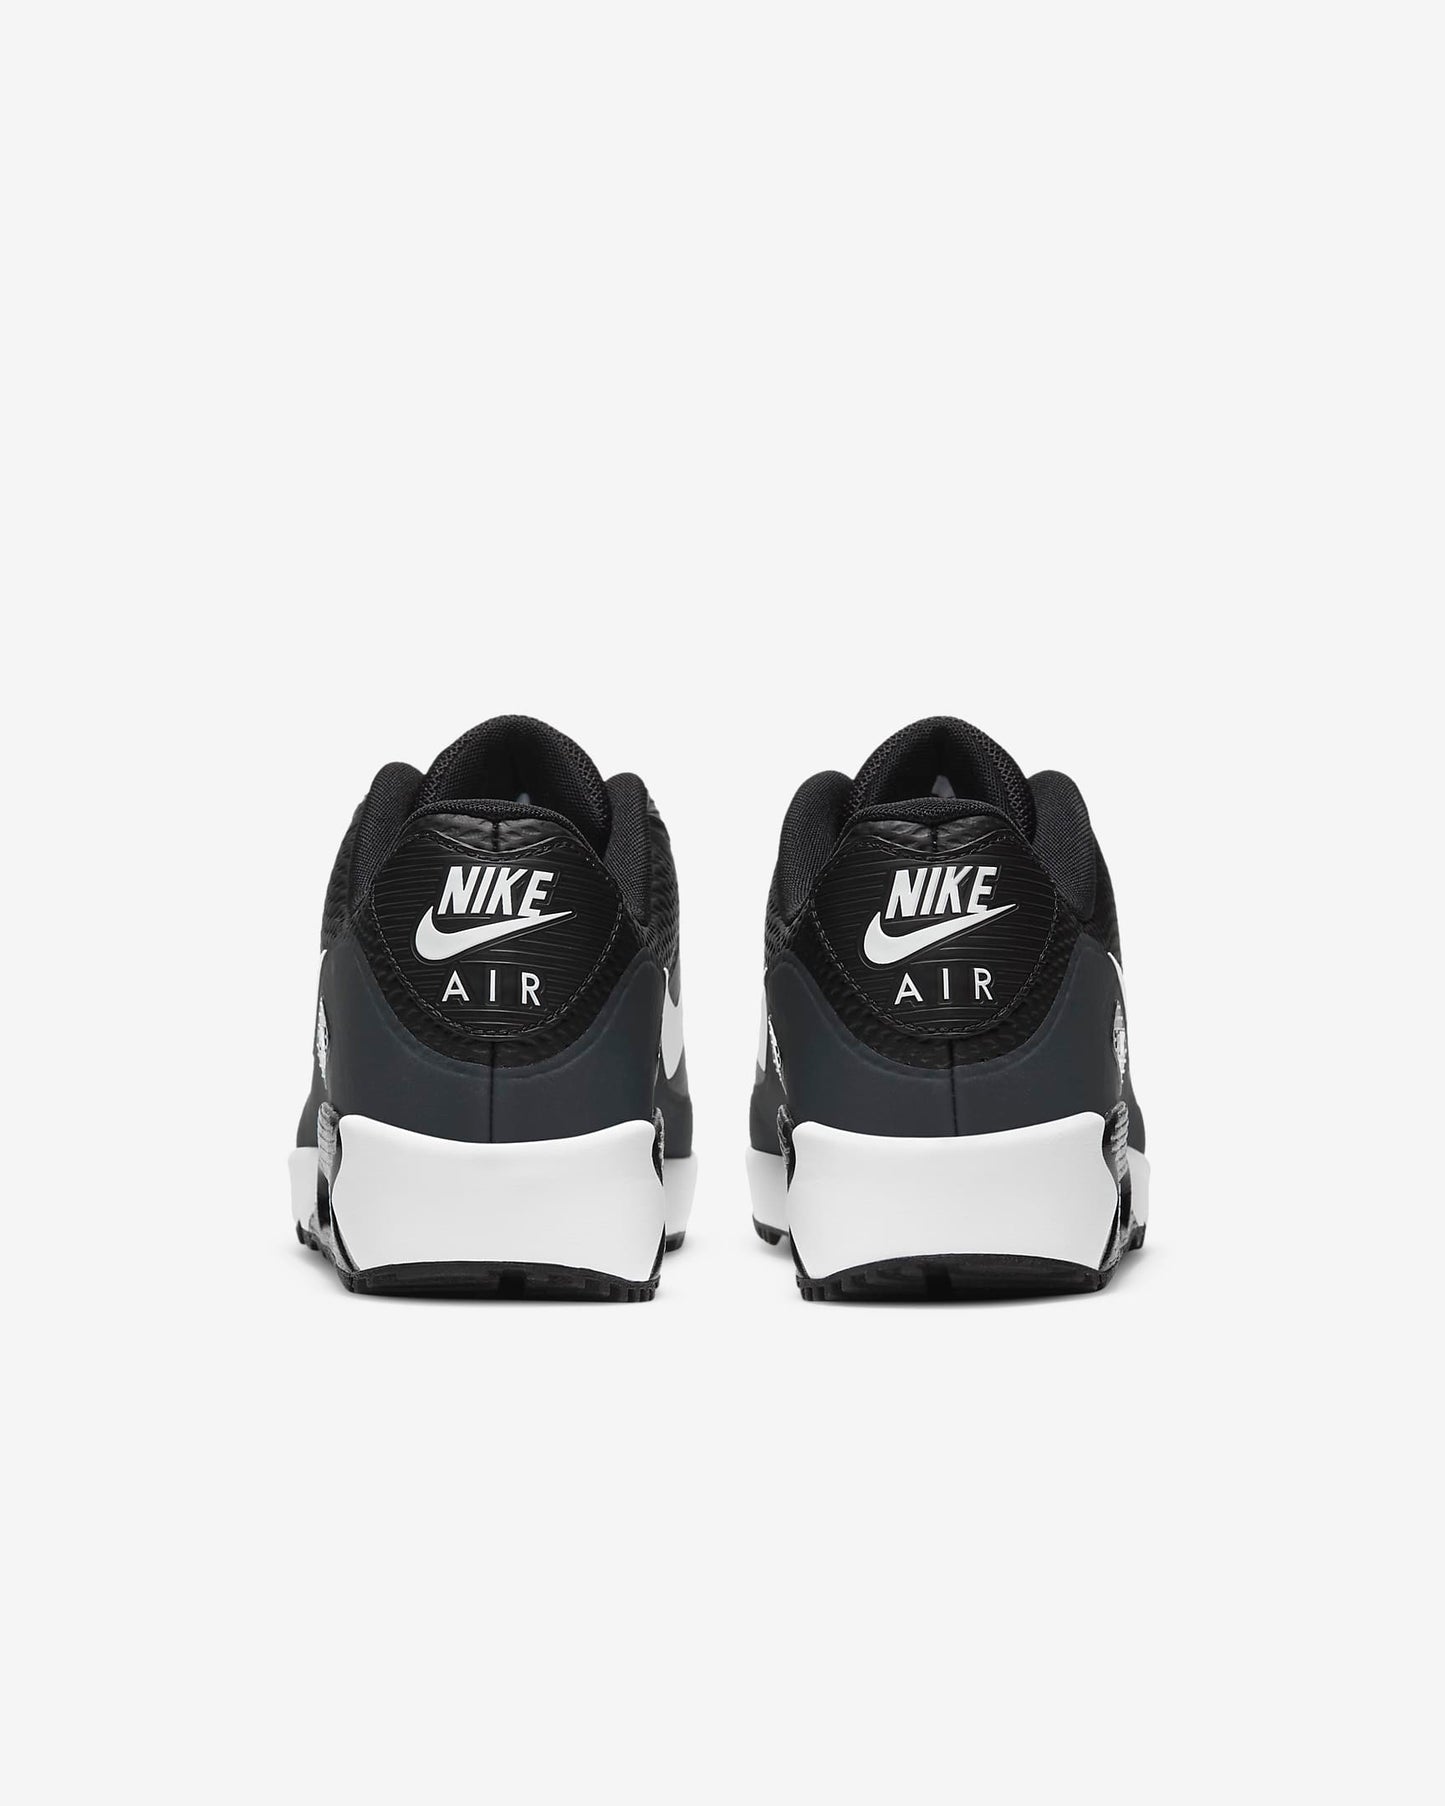 Nike Air Max 90 G Golf Shoe, Black/Anthracite/Cool Grey/White